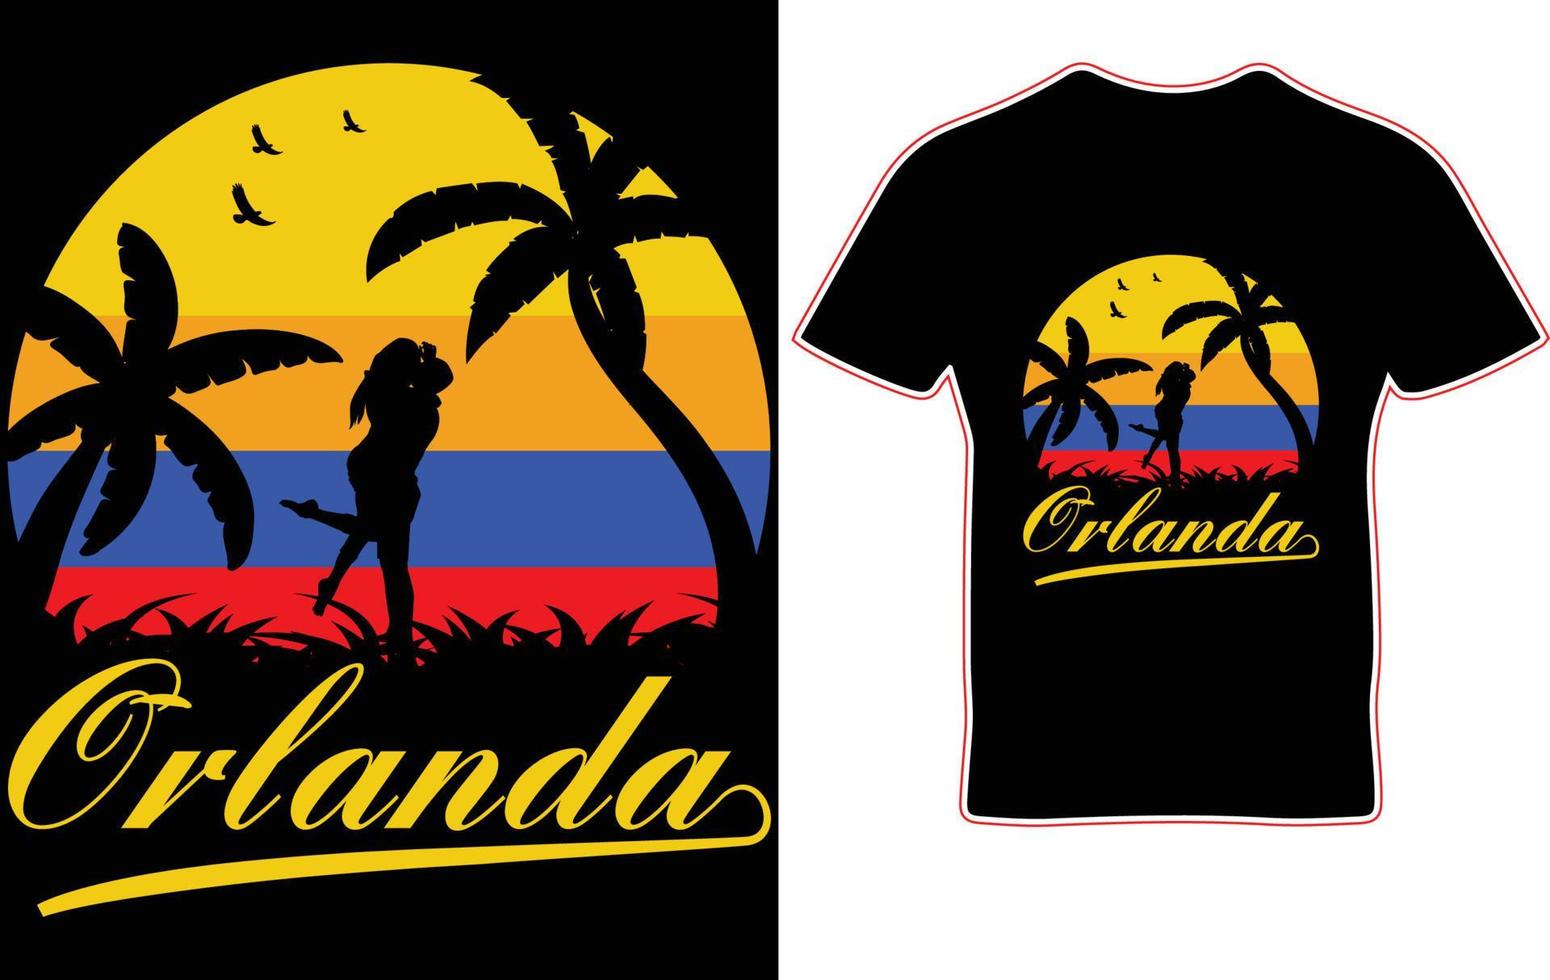 Orlanda t shirt design. vector